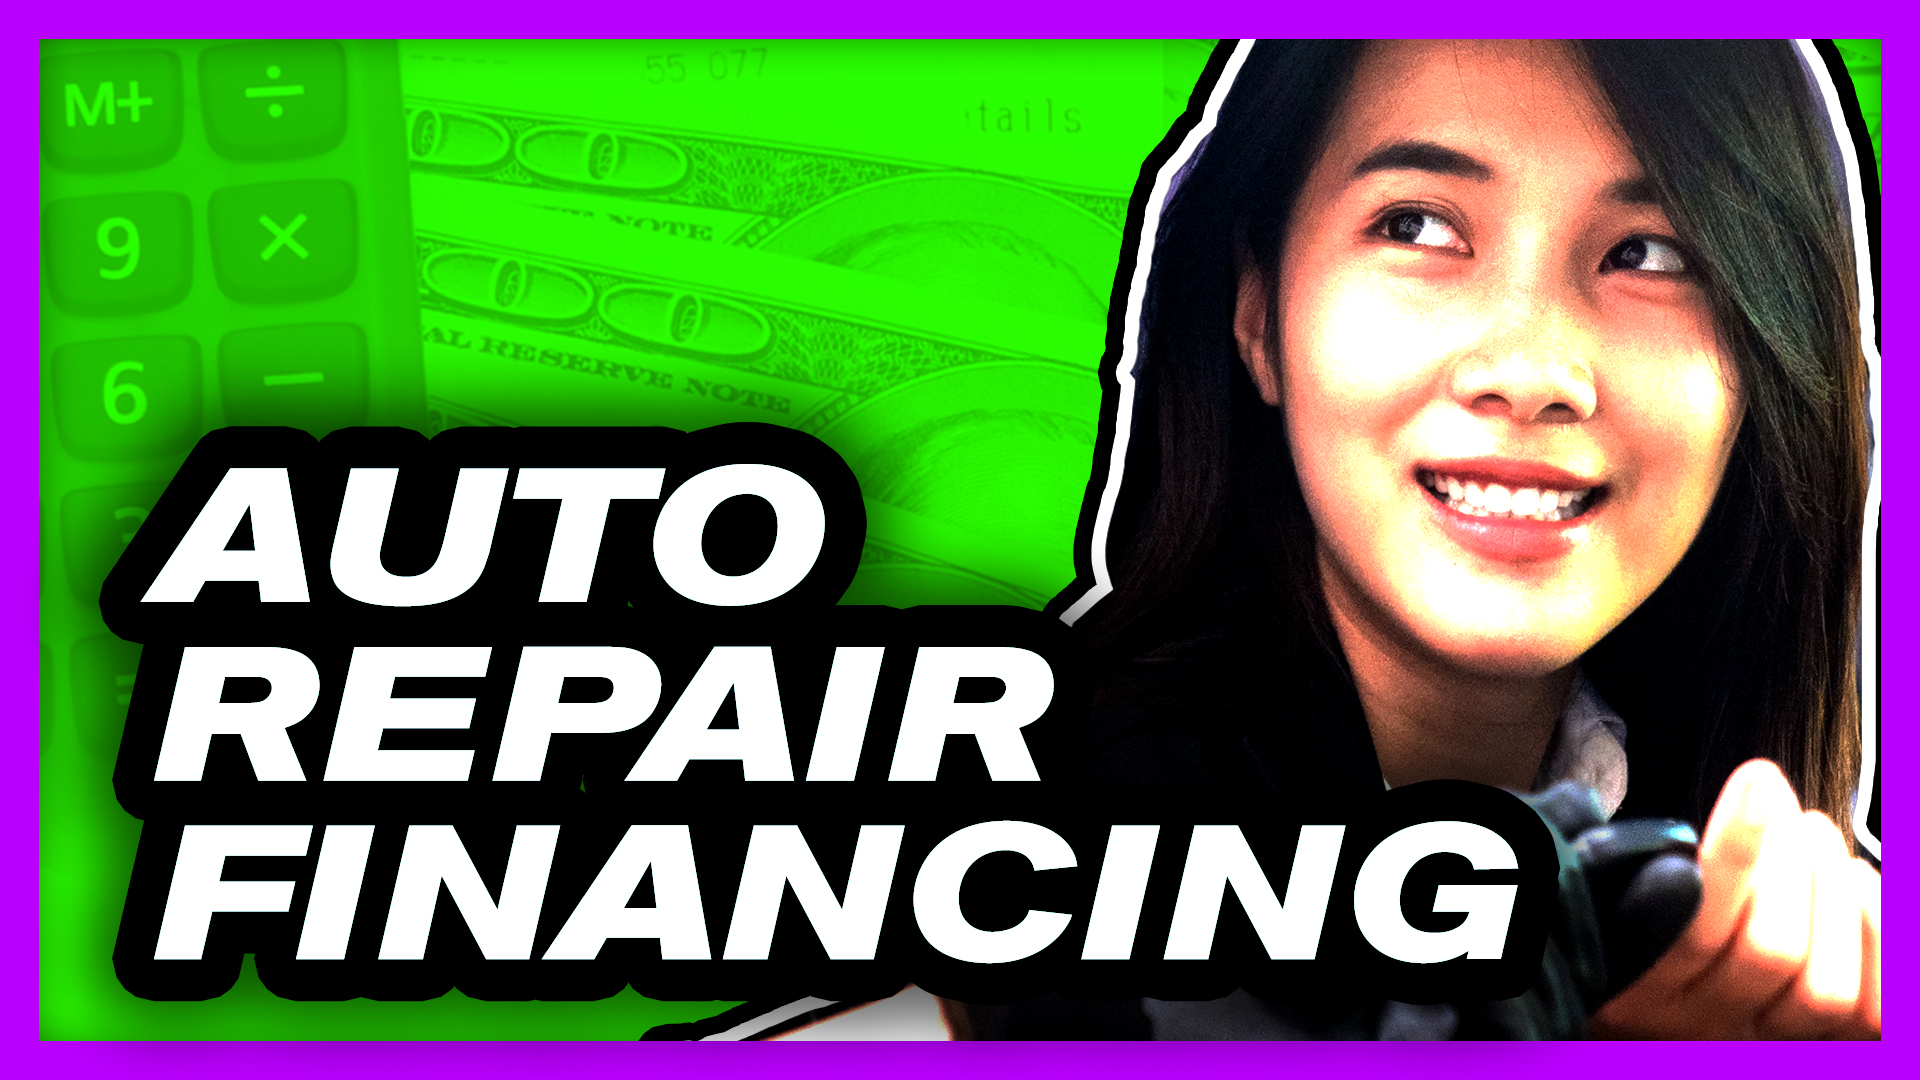 Youtube Video Thumbnail - "Auto Repair Financing"